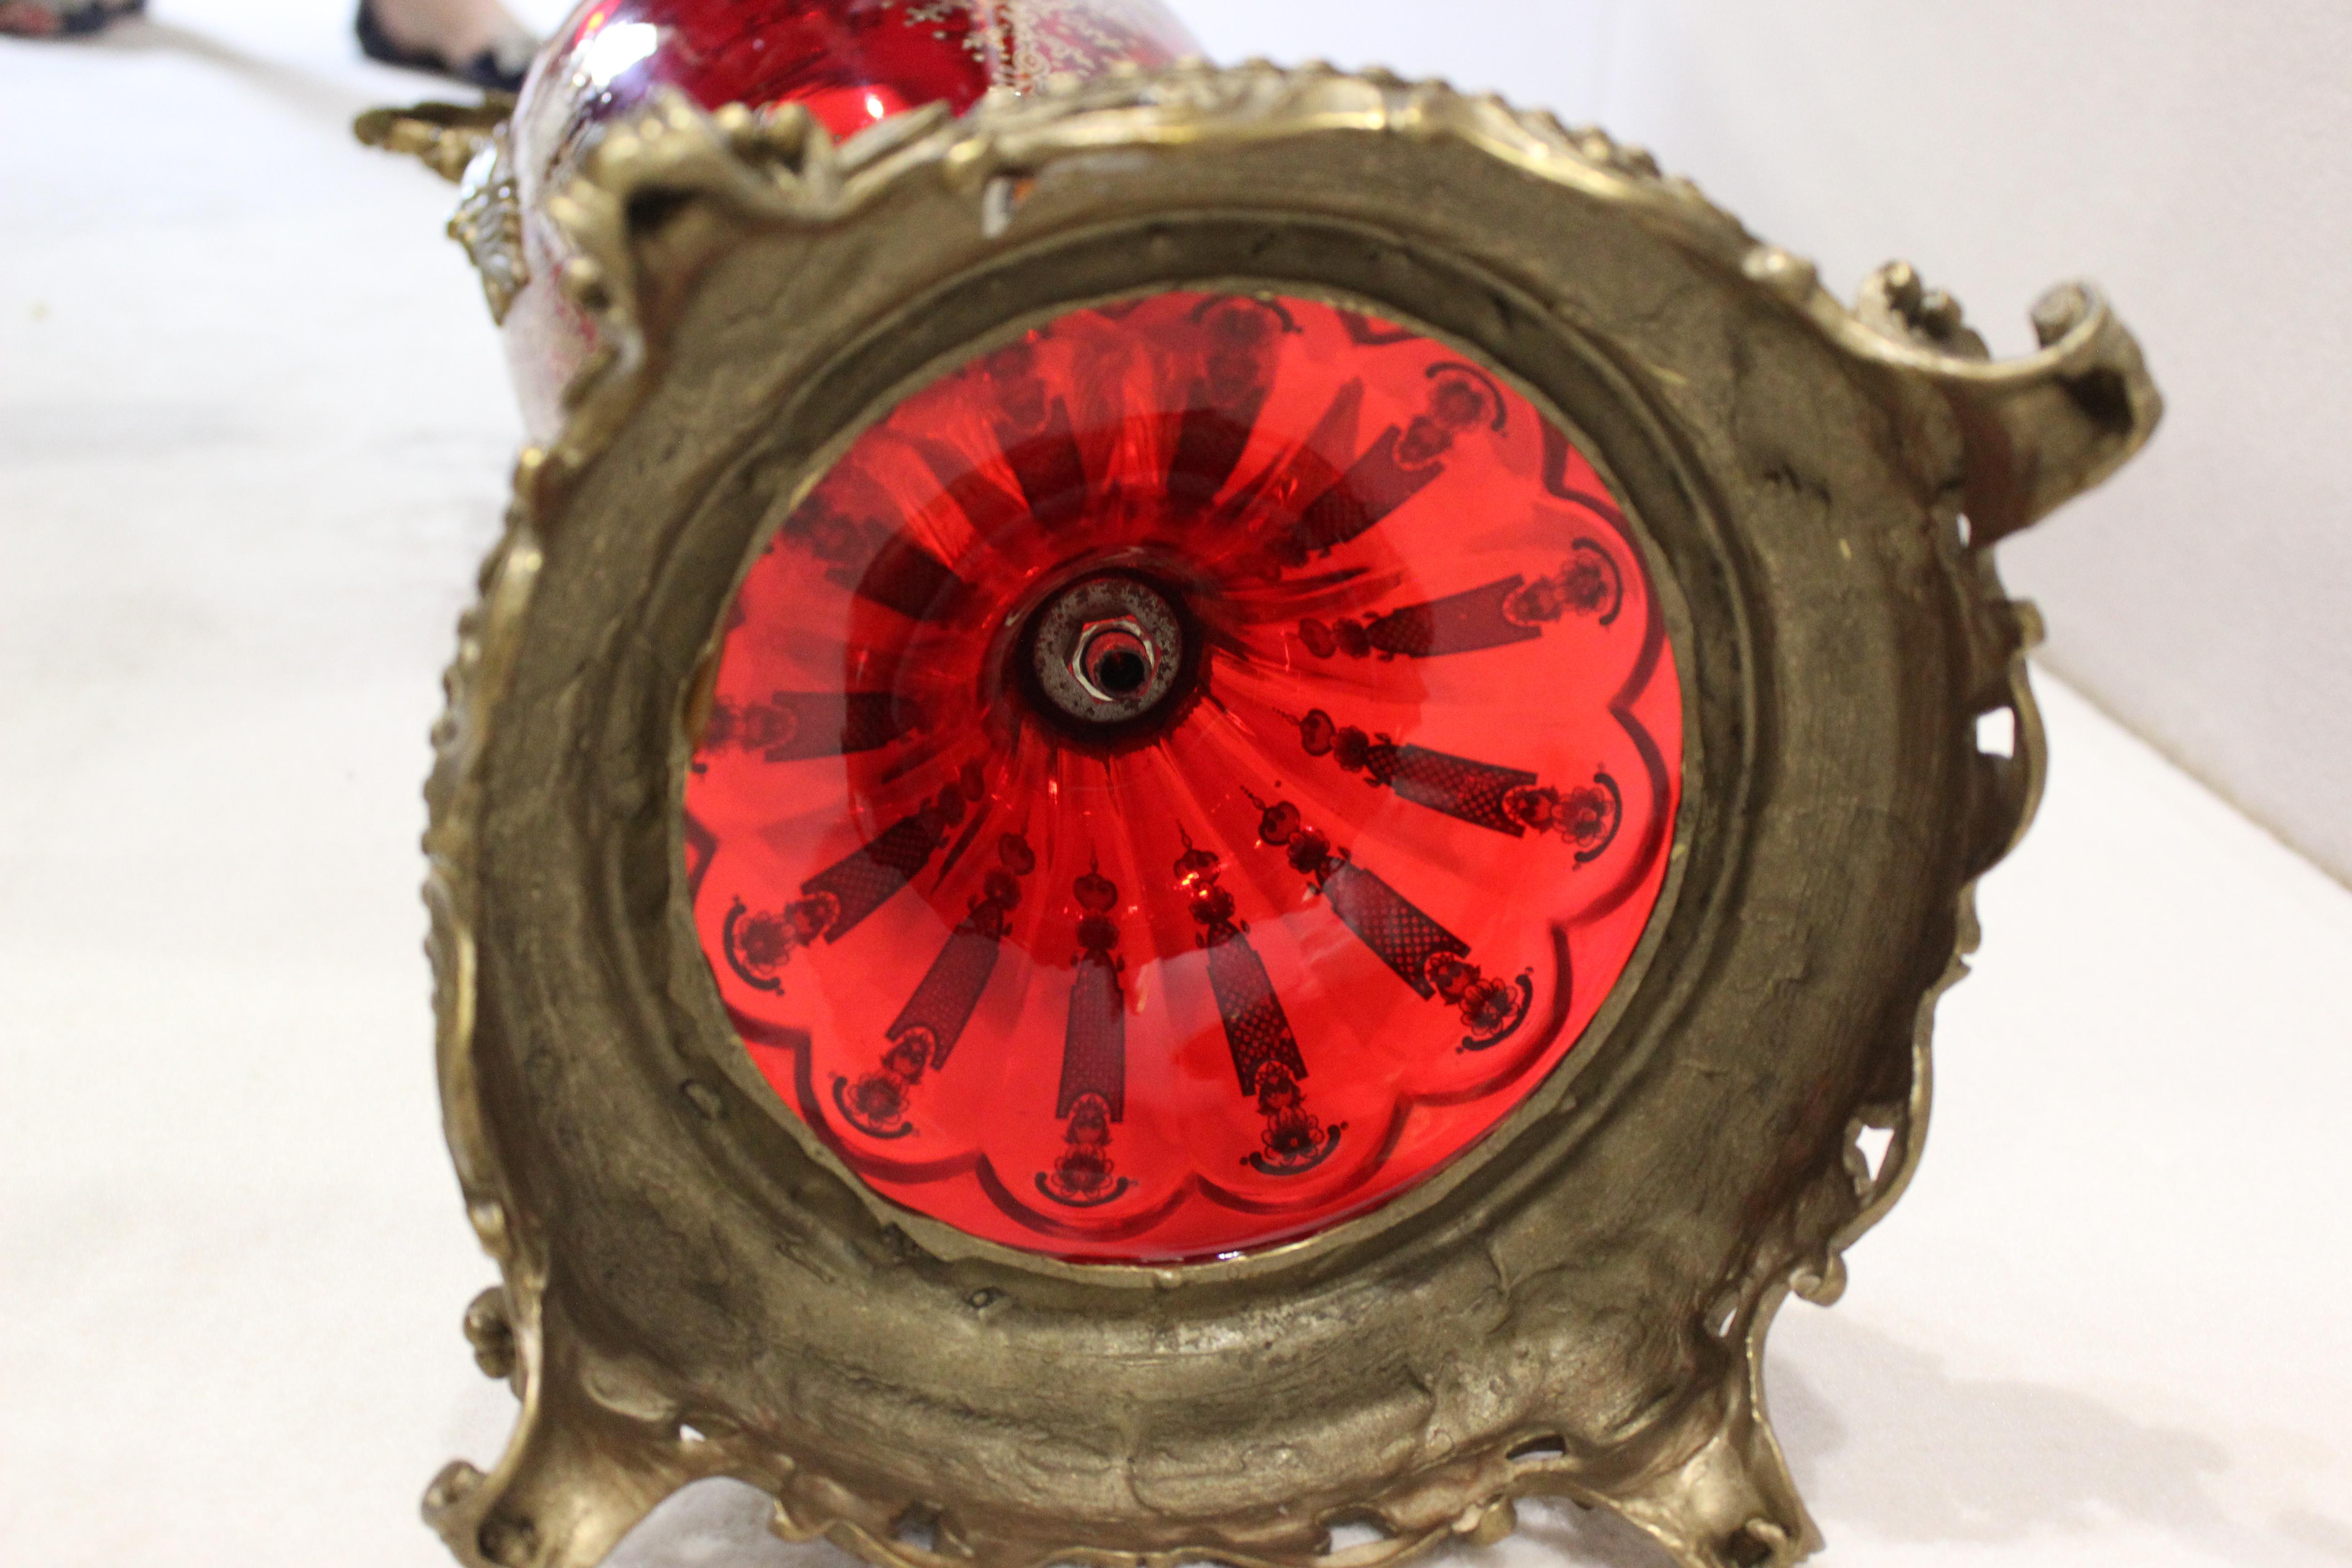 red crystal vase